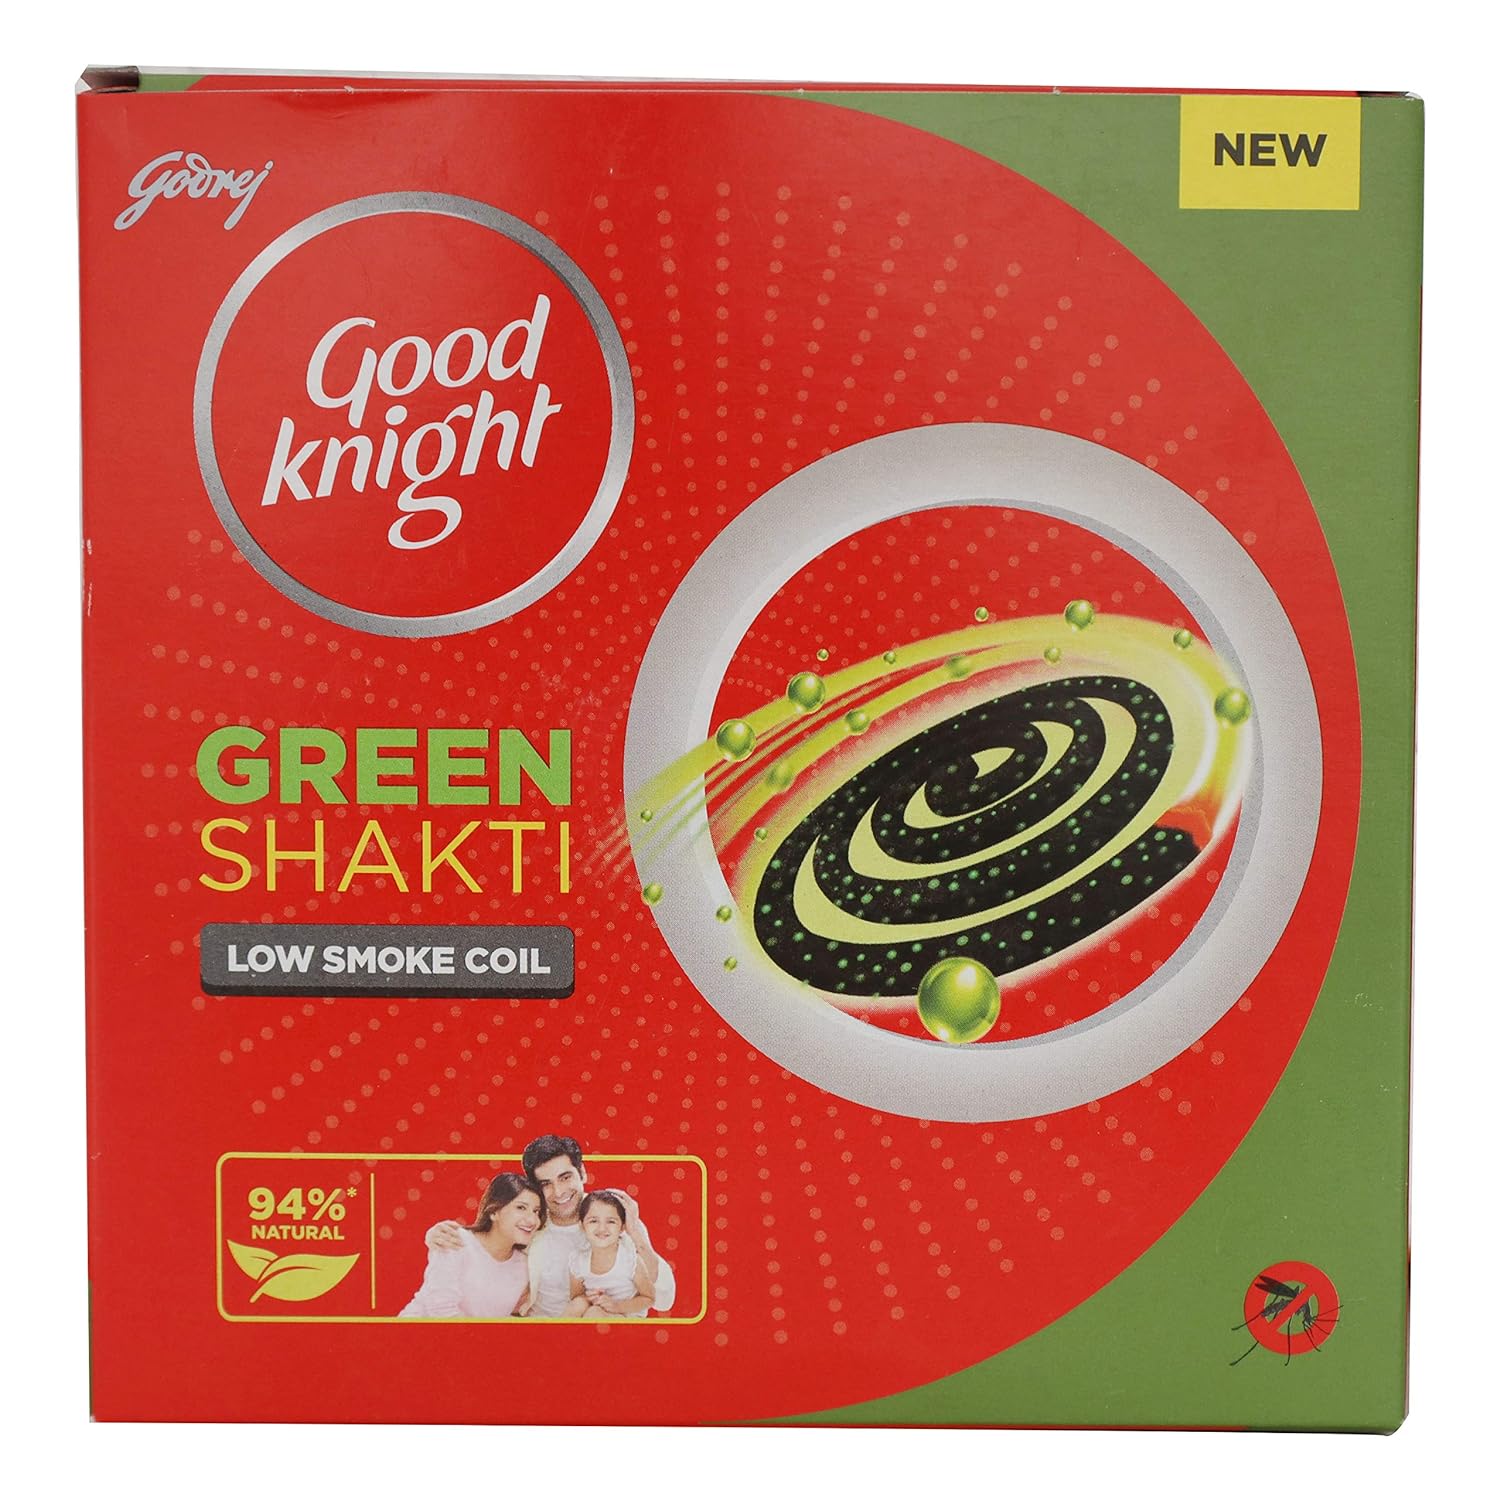 Good knight Green Shakti Low Smoke Coil - Pack of 10